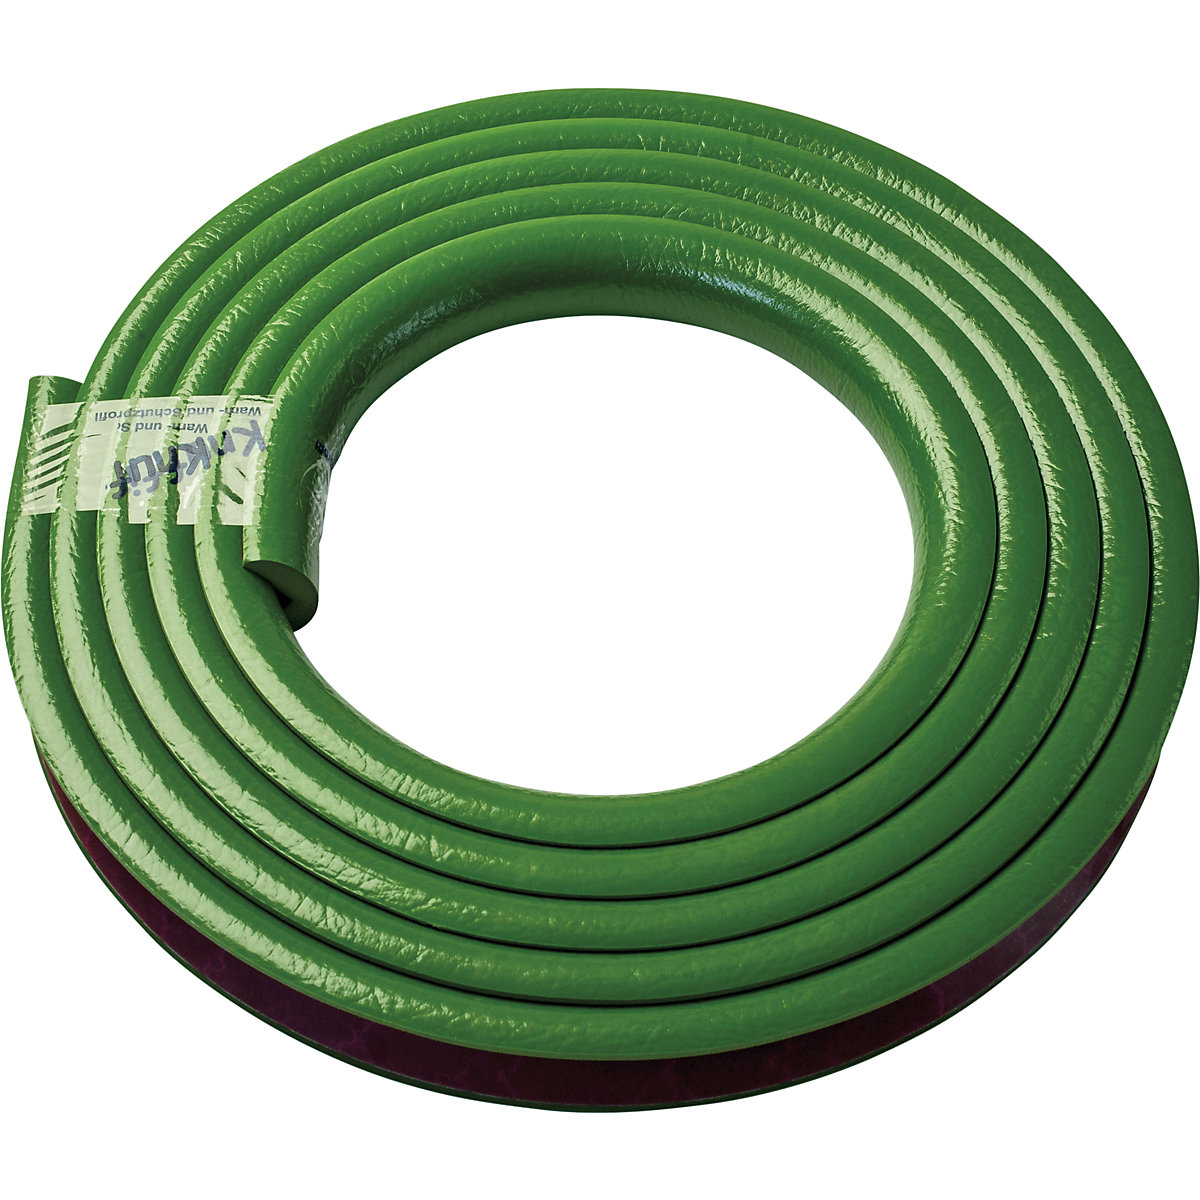 Zaščita vogalov Knuffi® – SHG, tip A, 1 rola po 5 m, zelene barve-26